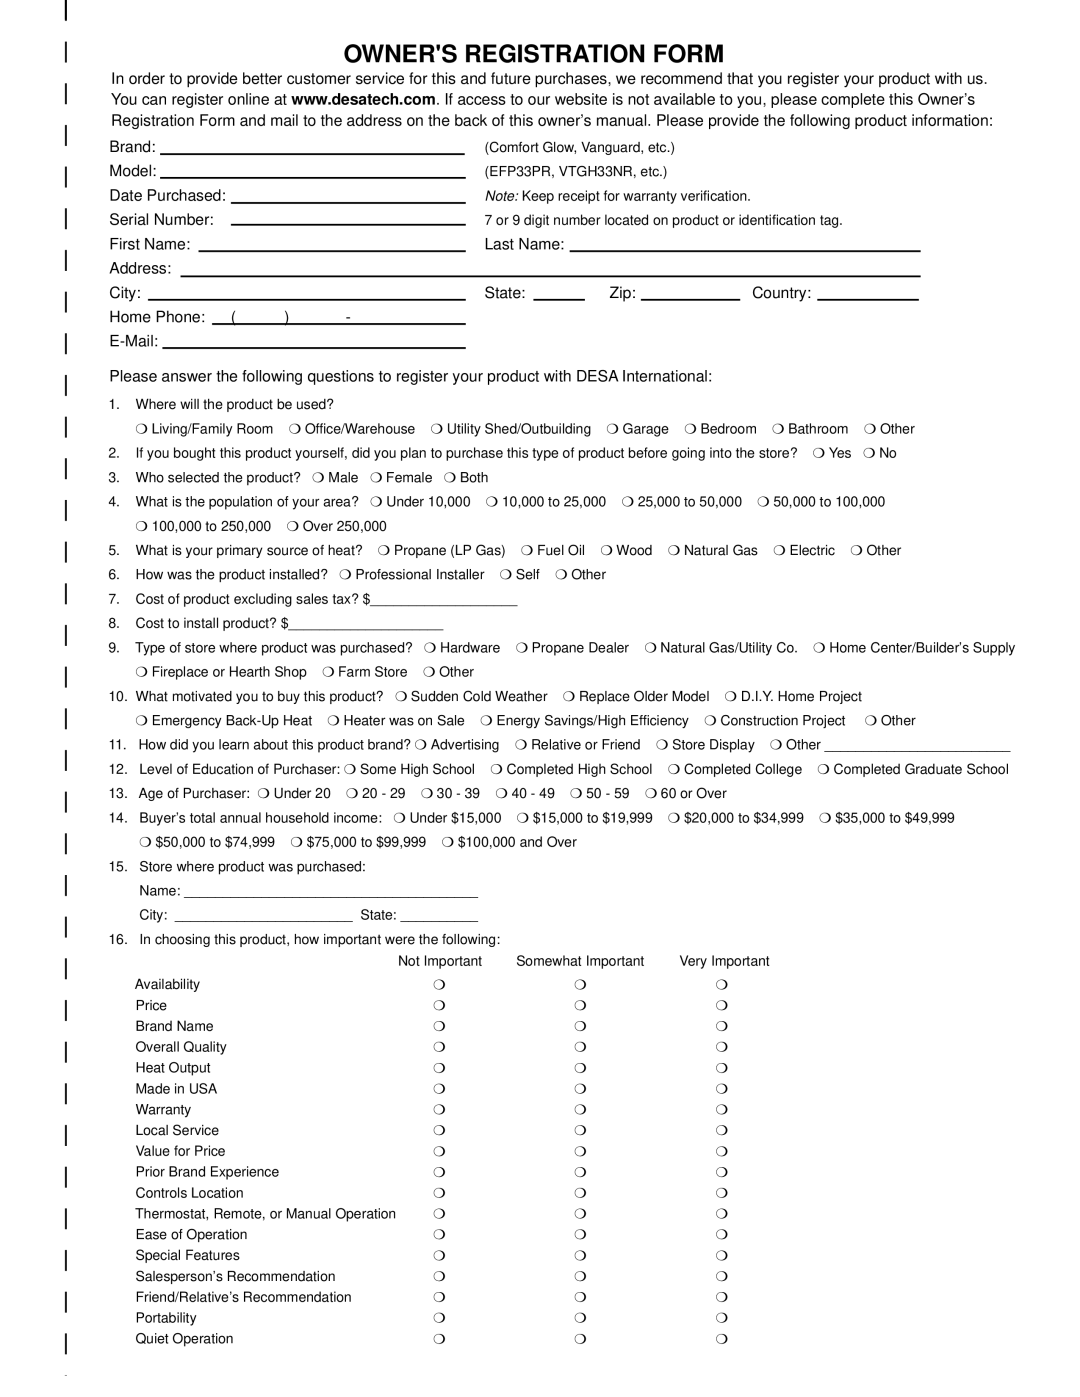 Desa EFP33PR, EFP33NR installation manual Owners Registration Form 